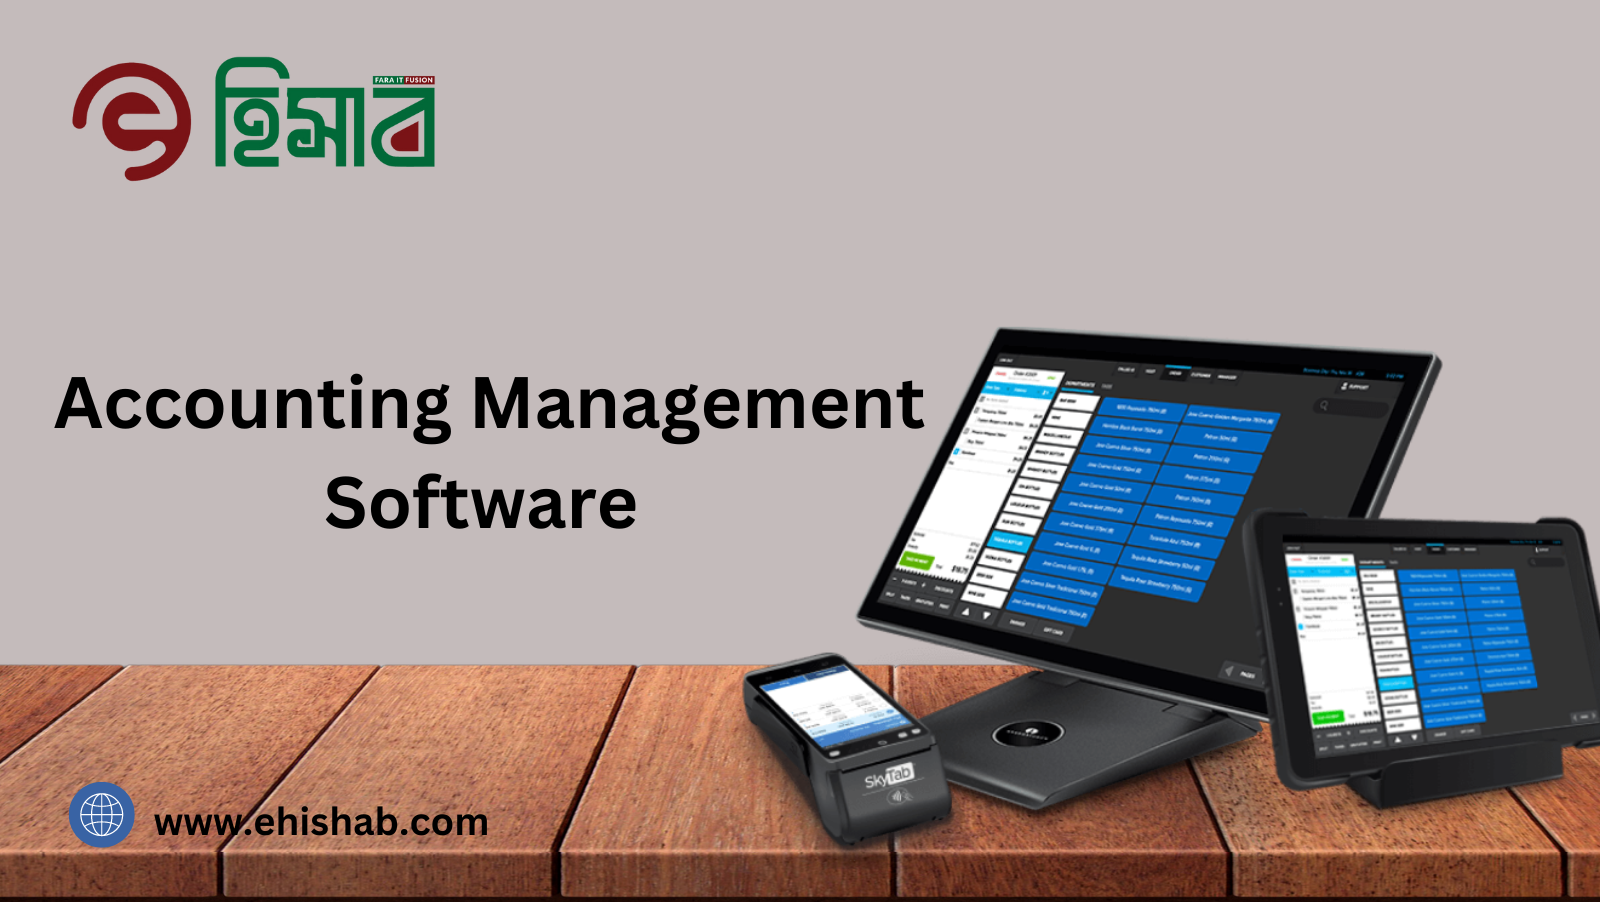 Account management software